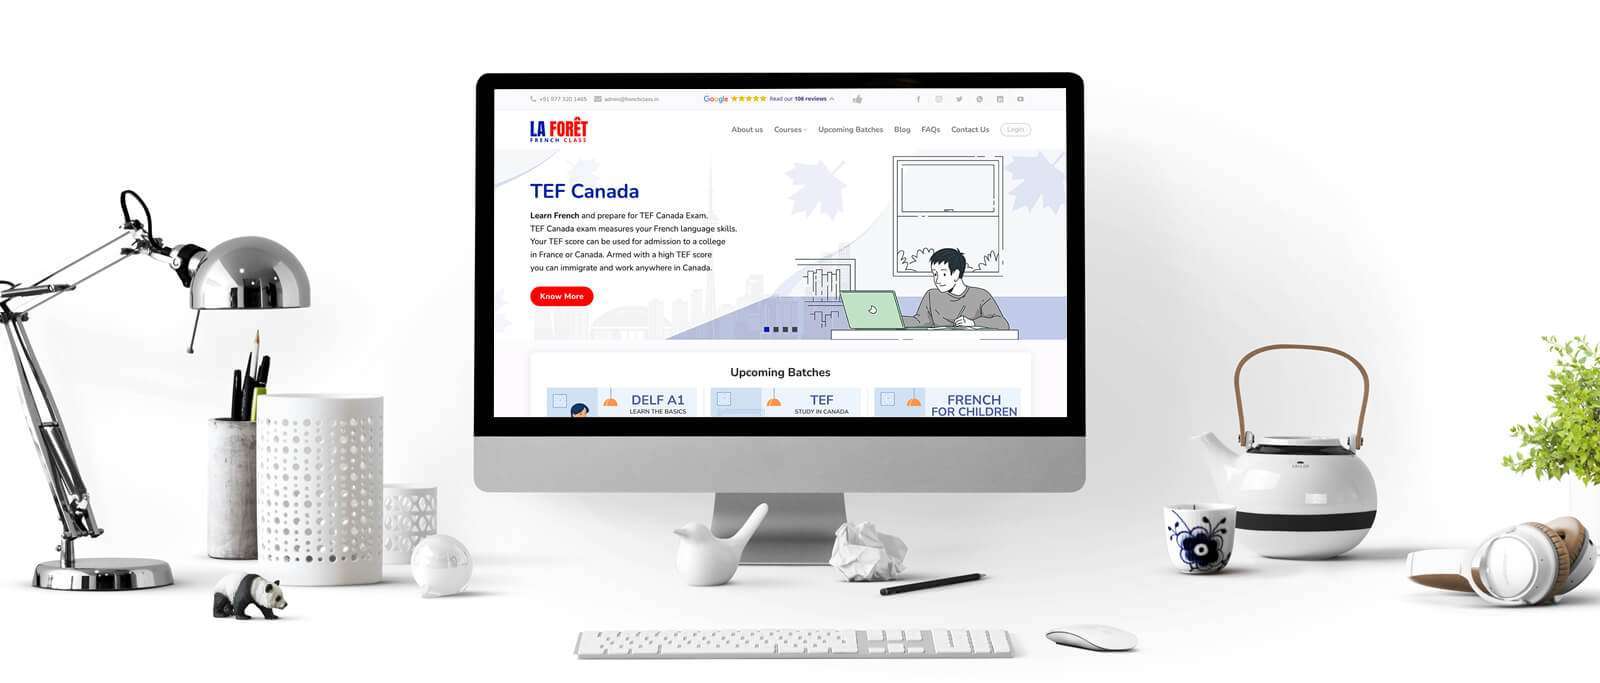 Ecommerce website for online education